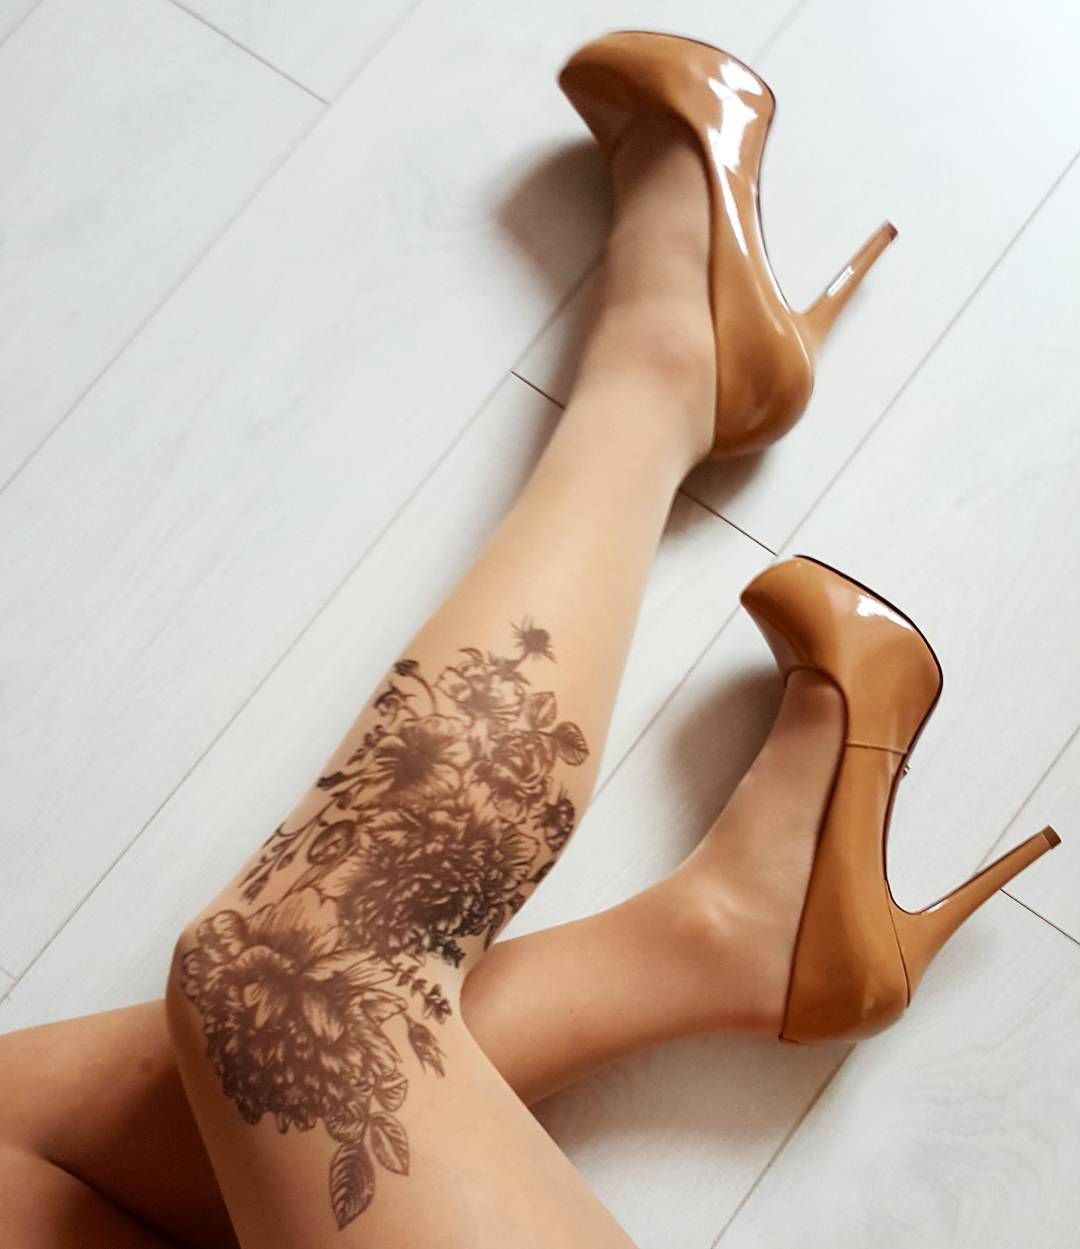 Mermaid Spell Tattoo Printed Sheer Tights at Ireland's Online Shop